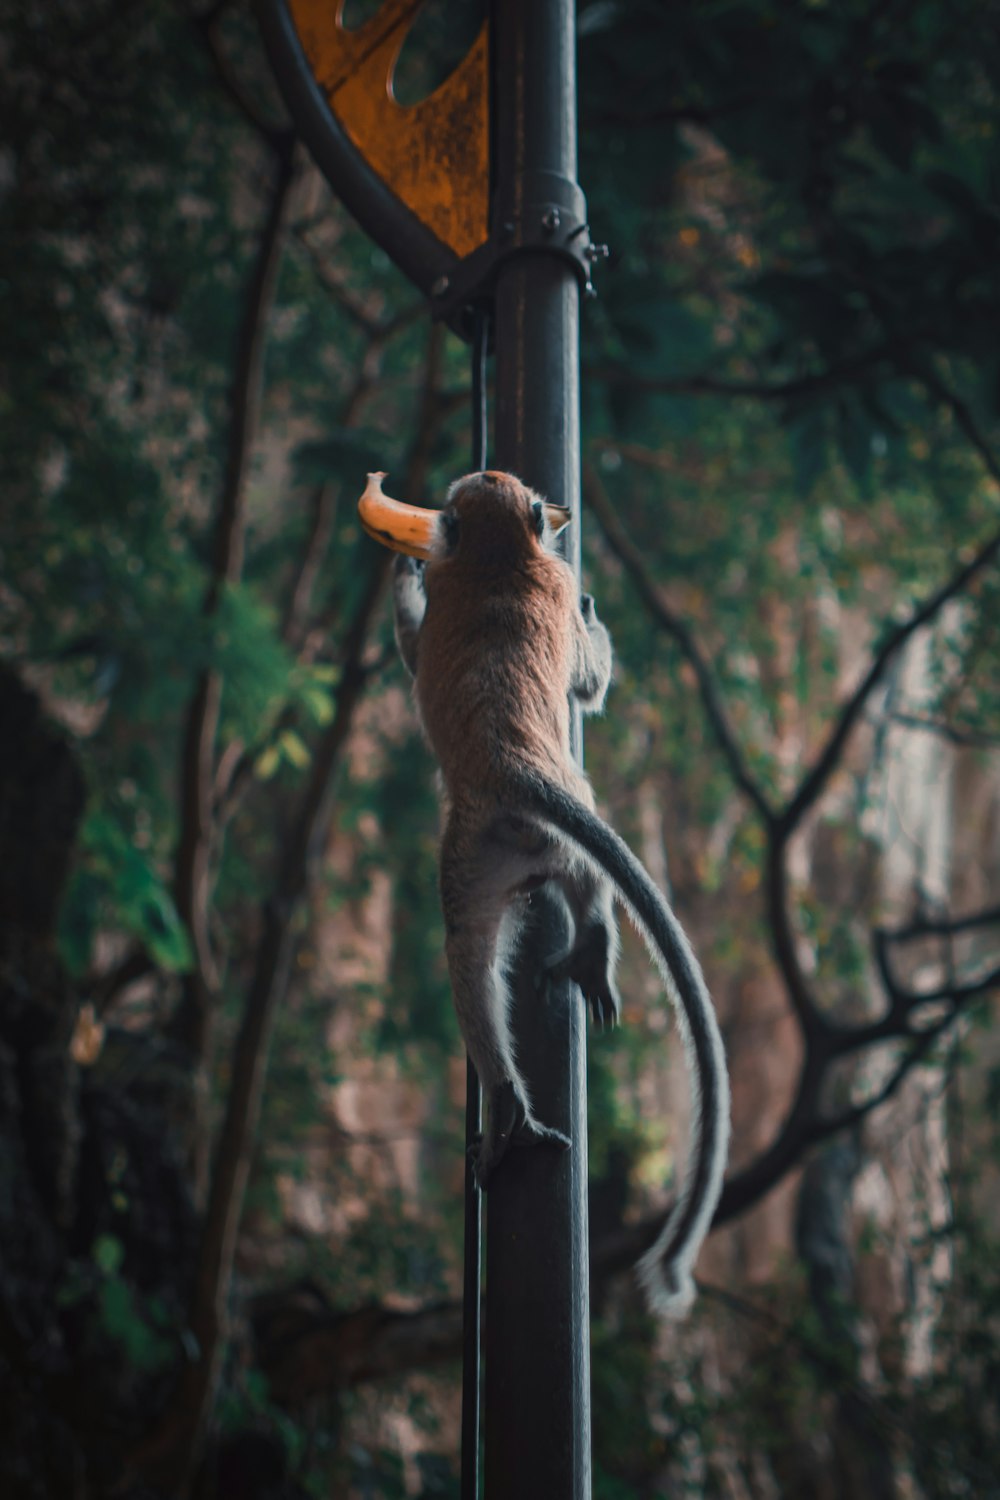 a monkey on a pole reaching up to a traffic light